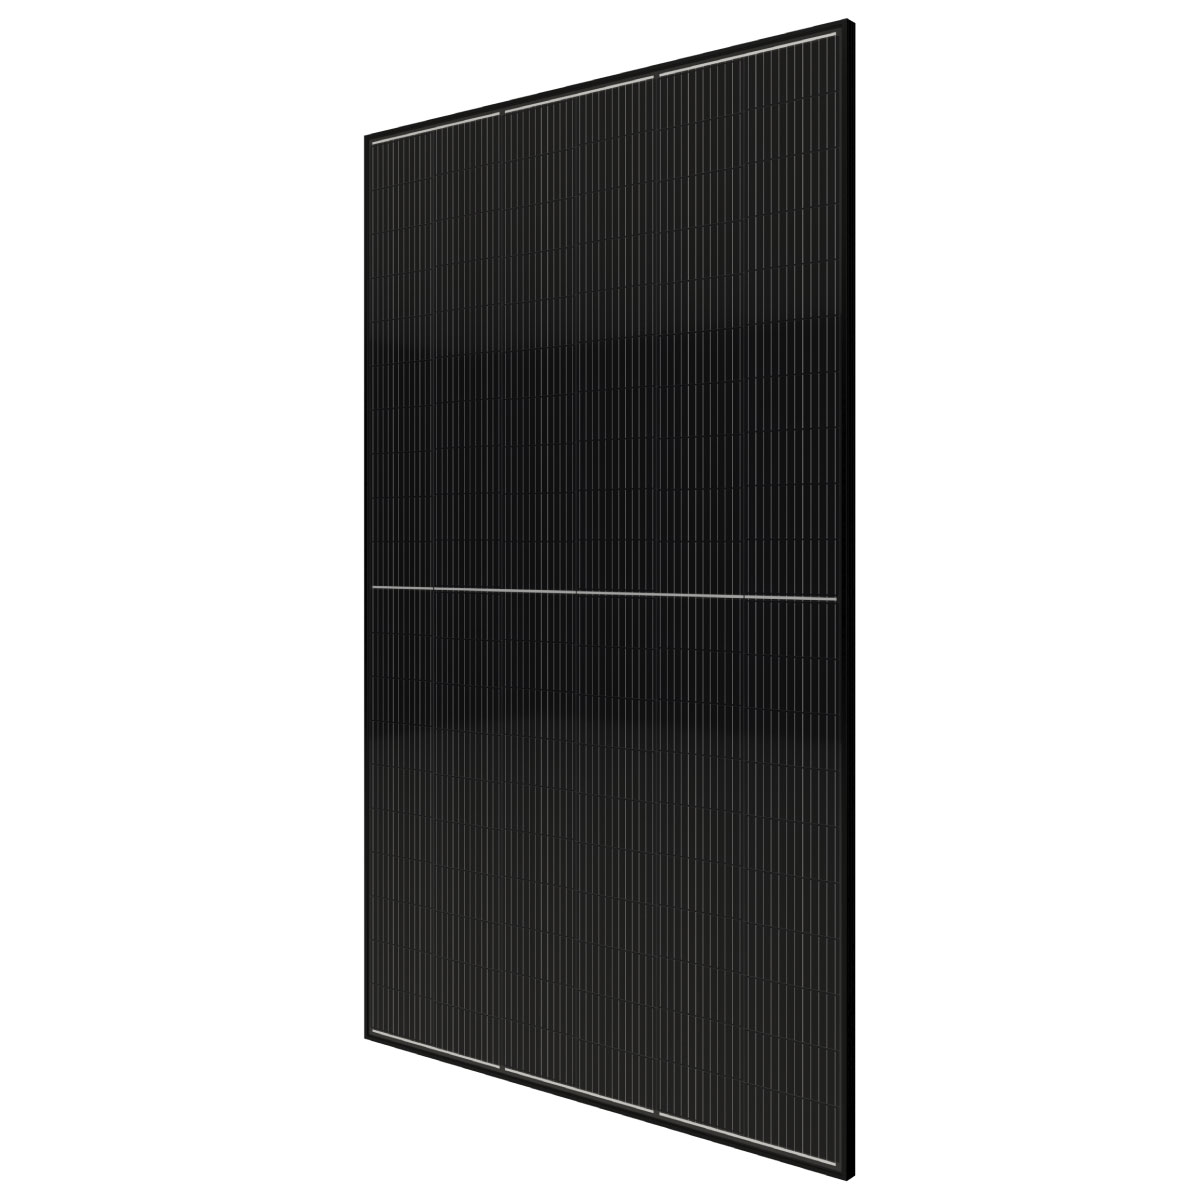 TommaTech 605Wp 120PM M12 Dark Series Solar Panel